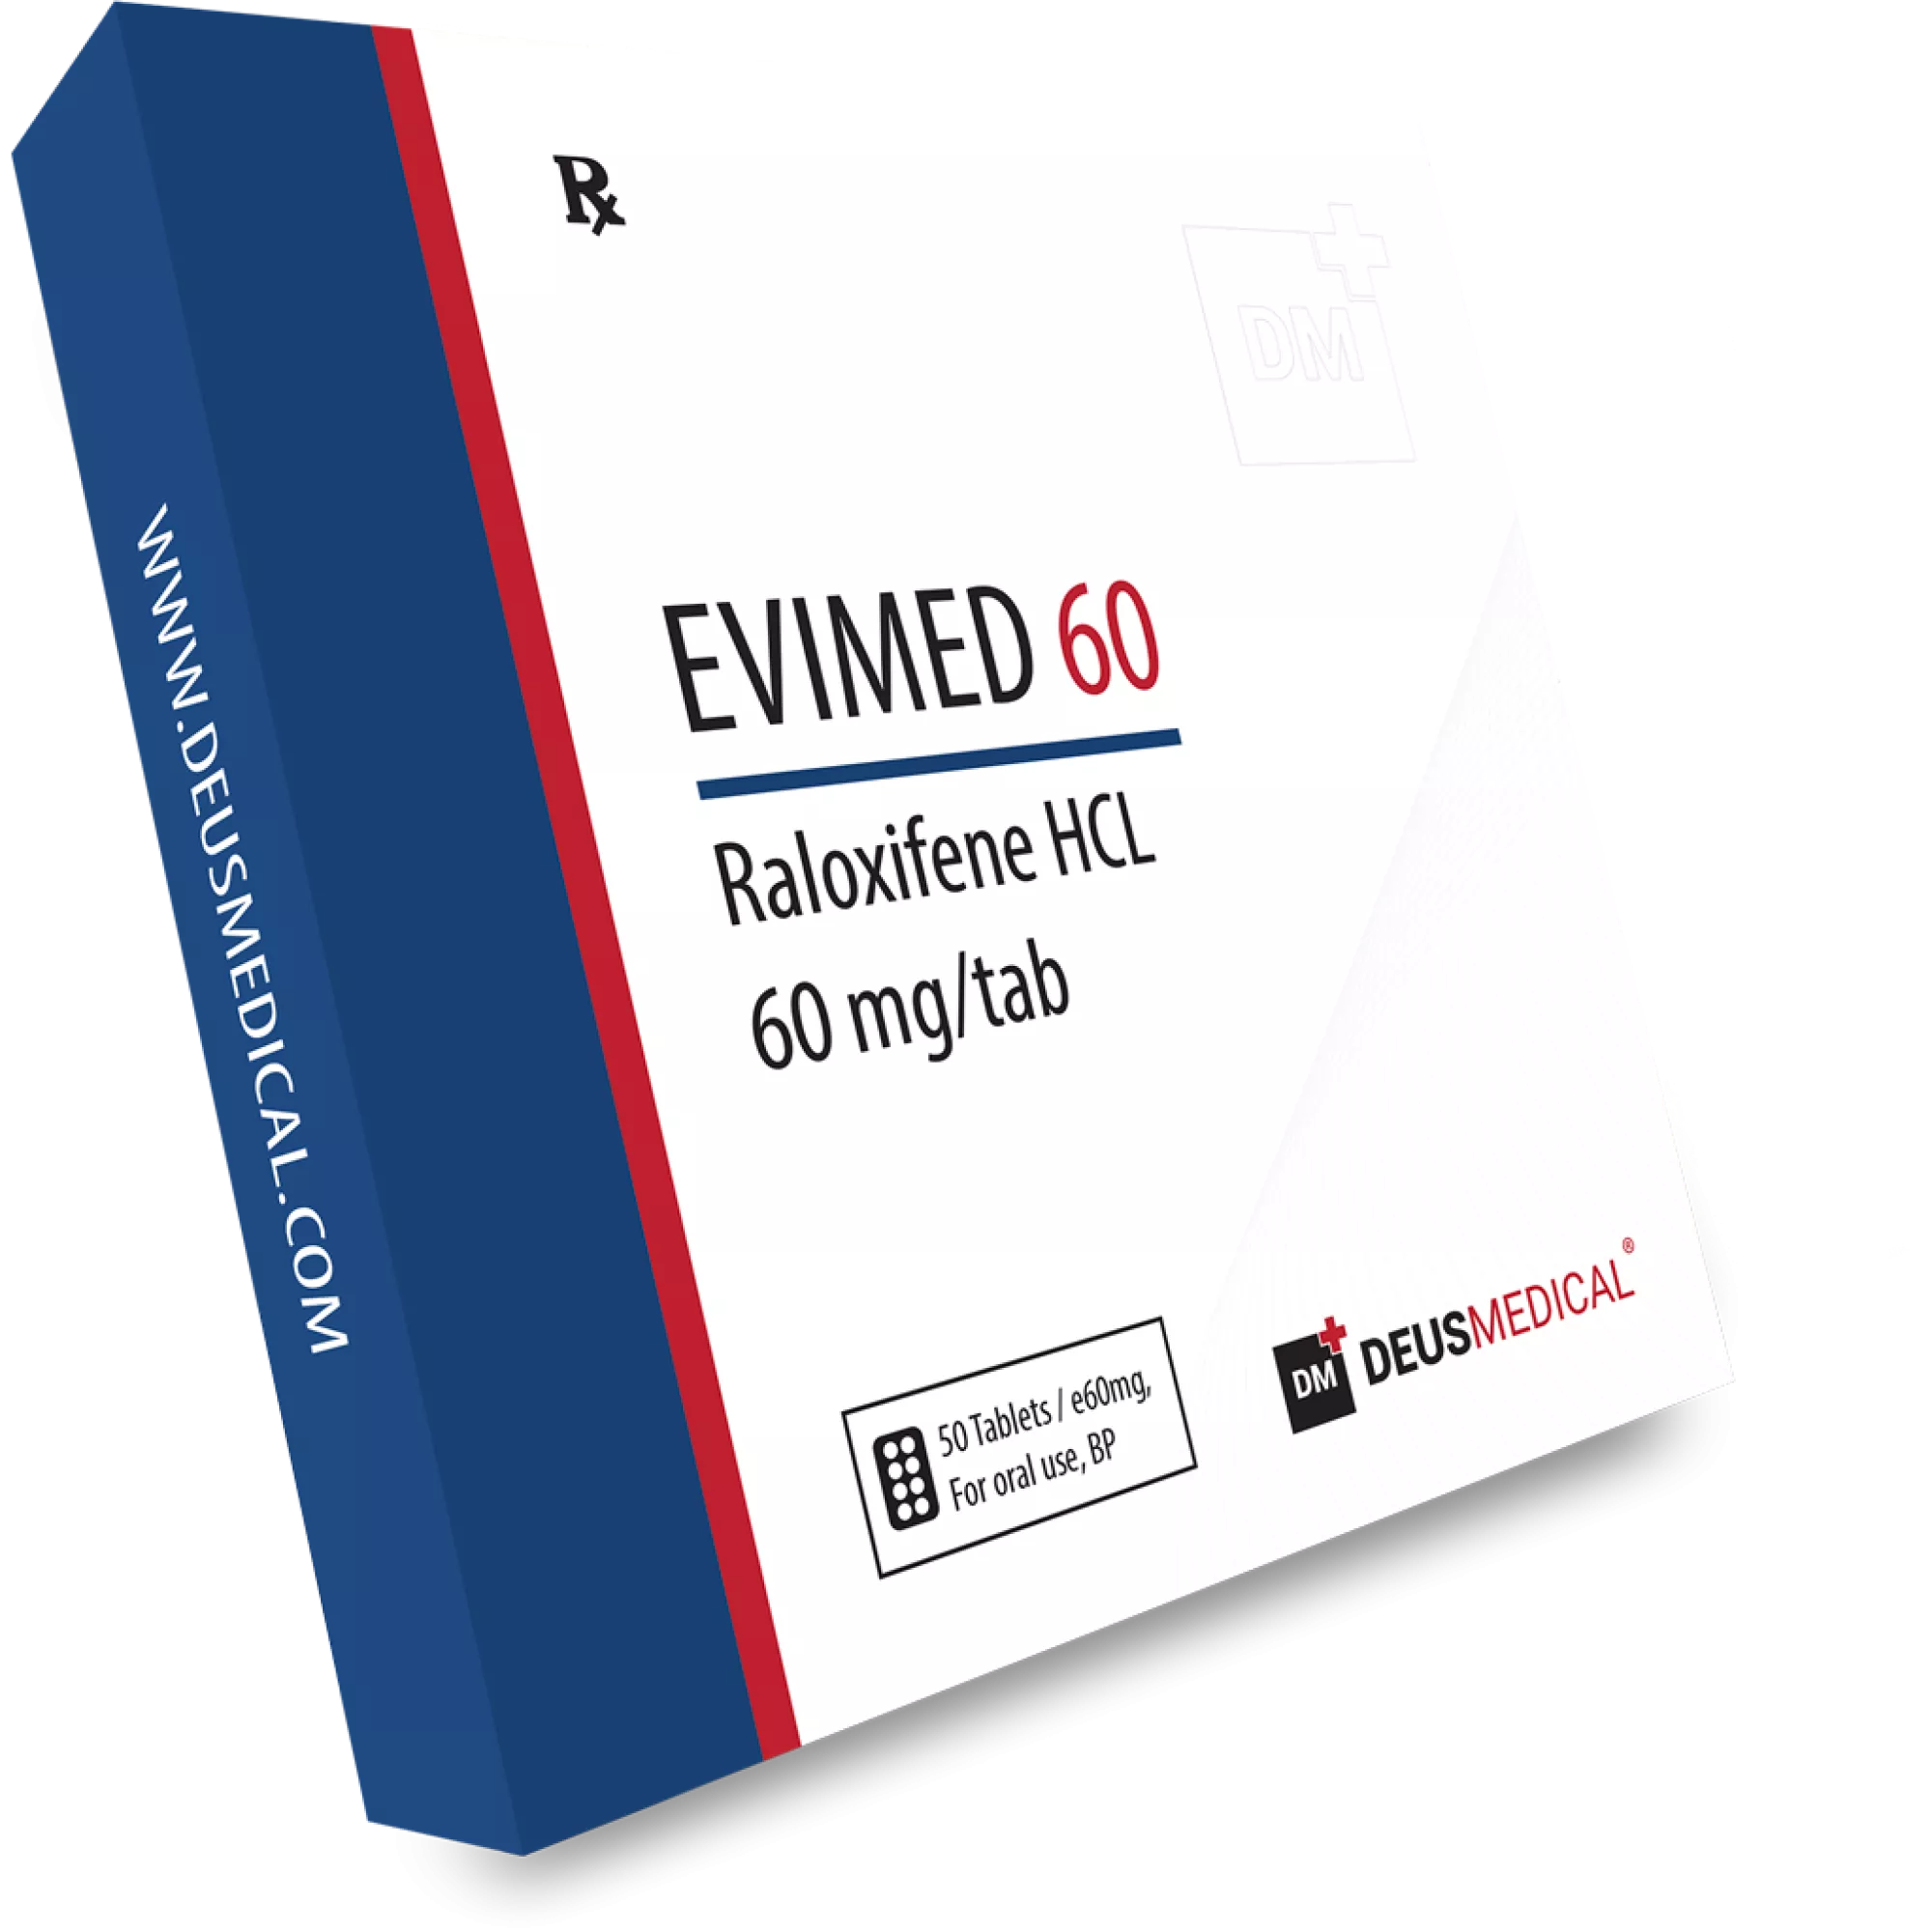 EVIMED 60 (Raloxifene HCL), Deus Medical, Buy Steroids Online - www.deuspower.shop